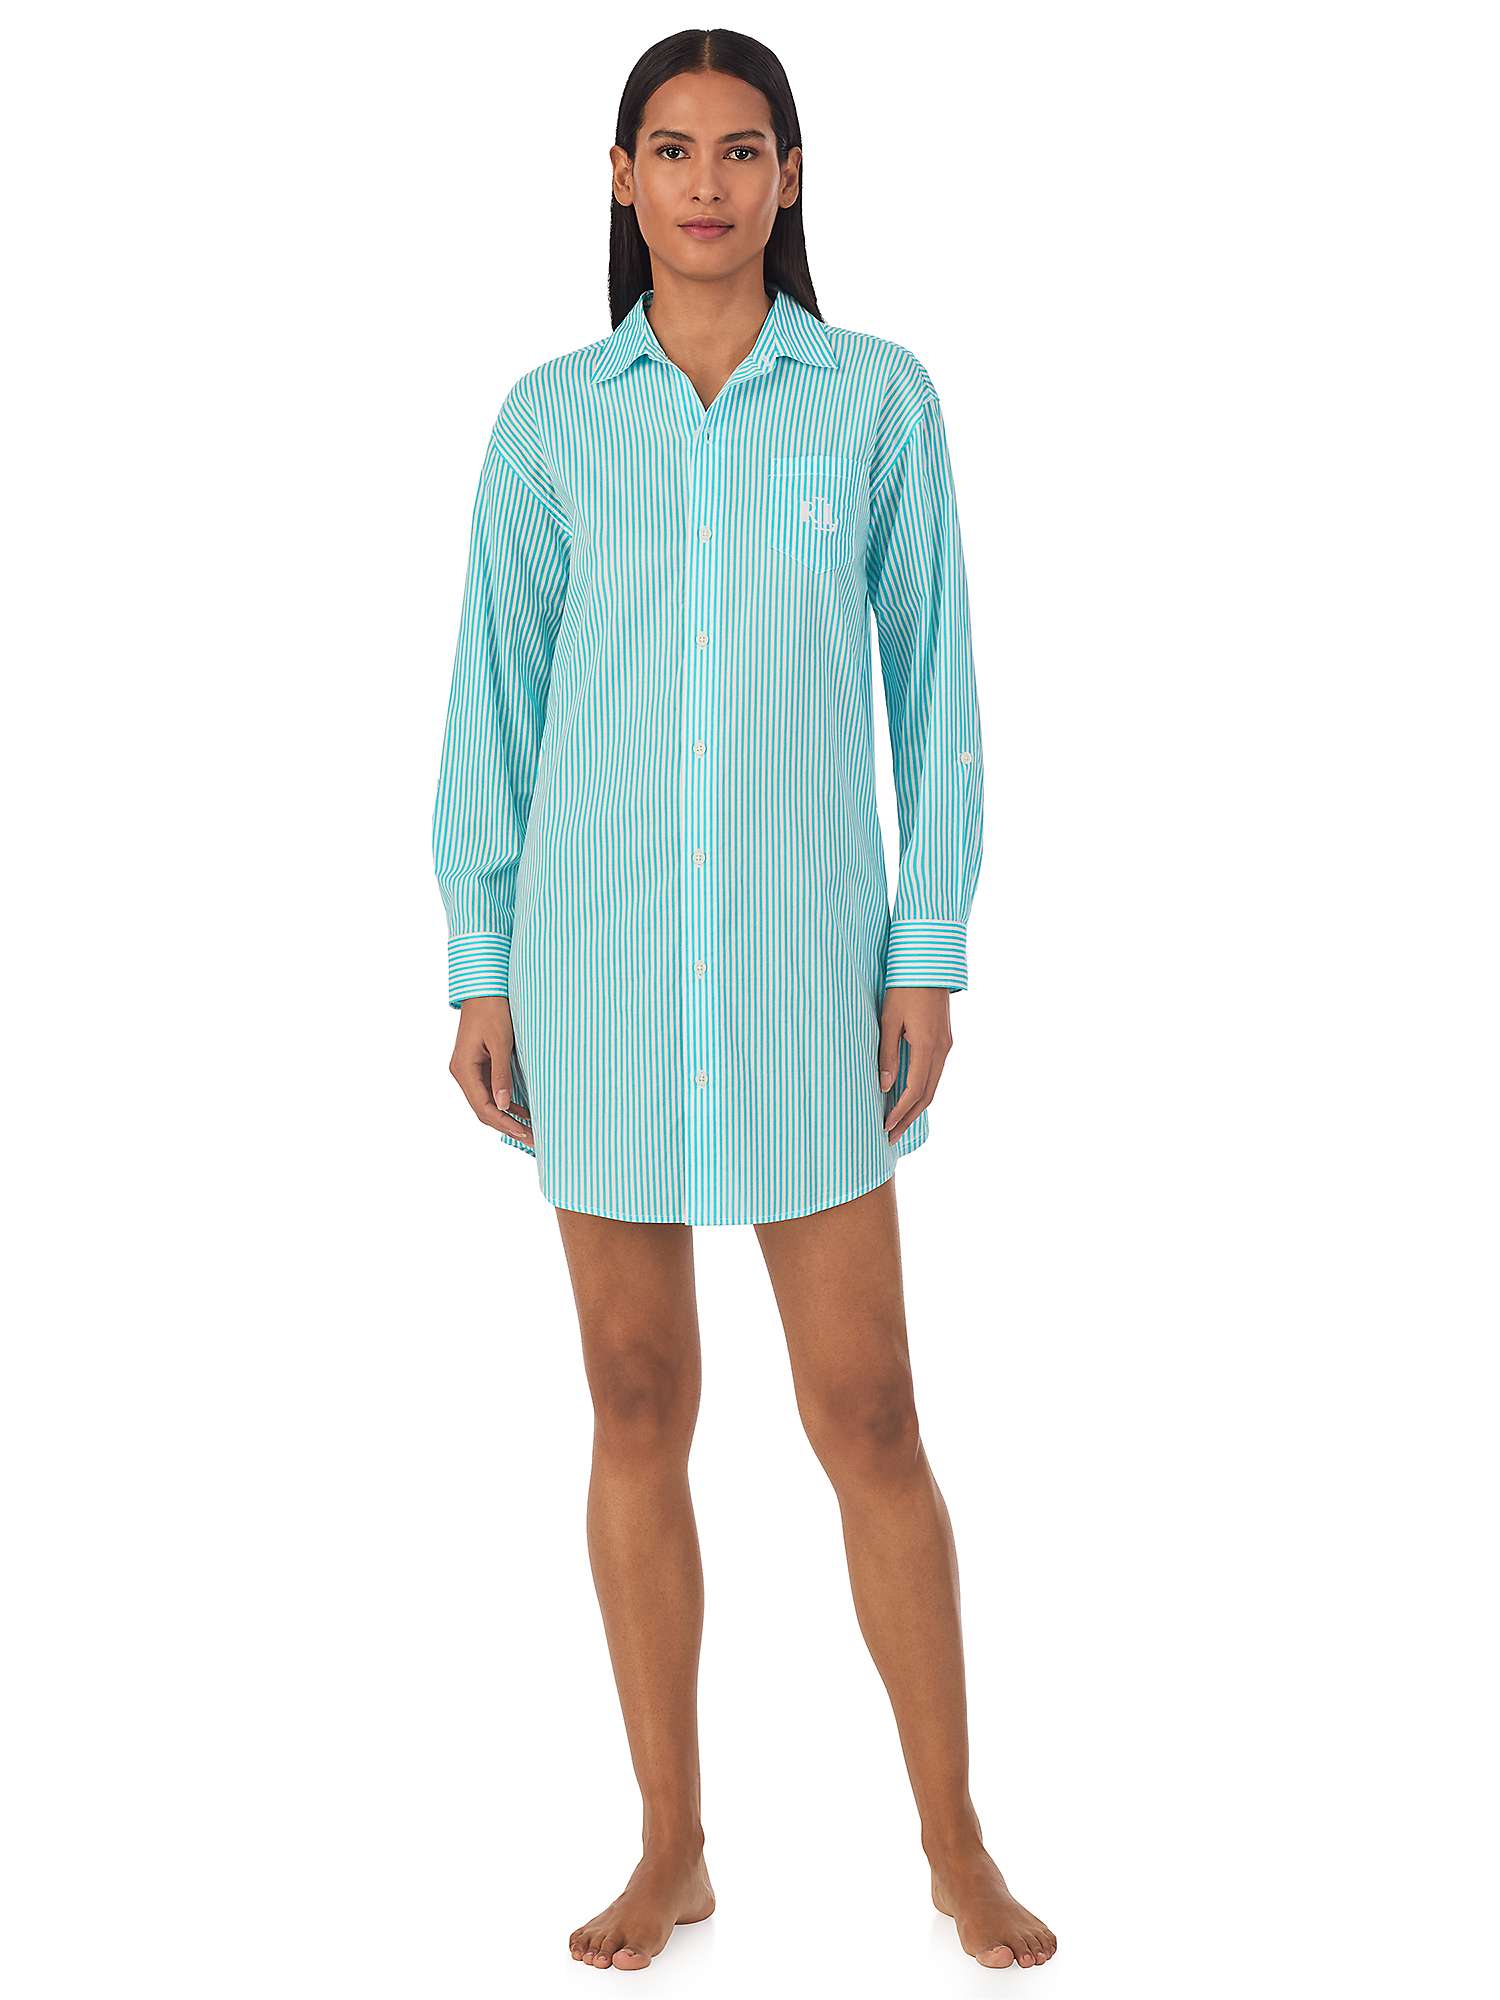 Buy Lauren Ralph Lauren Striped Nightshirt, Turquoise/White Online at johnlewis.com